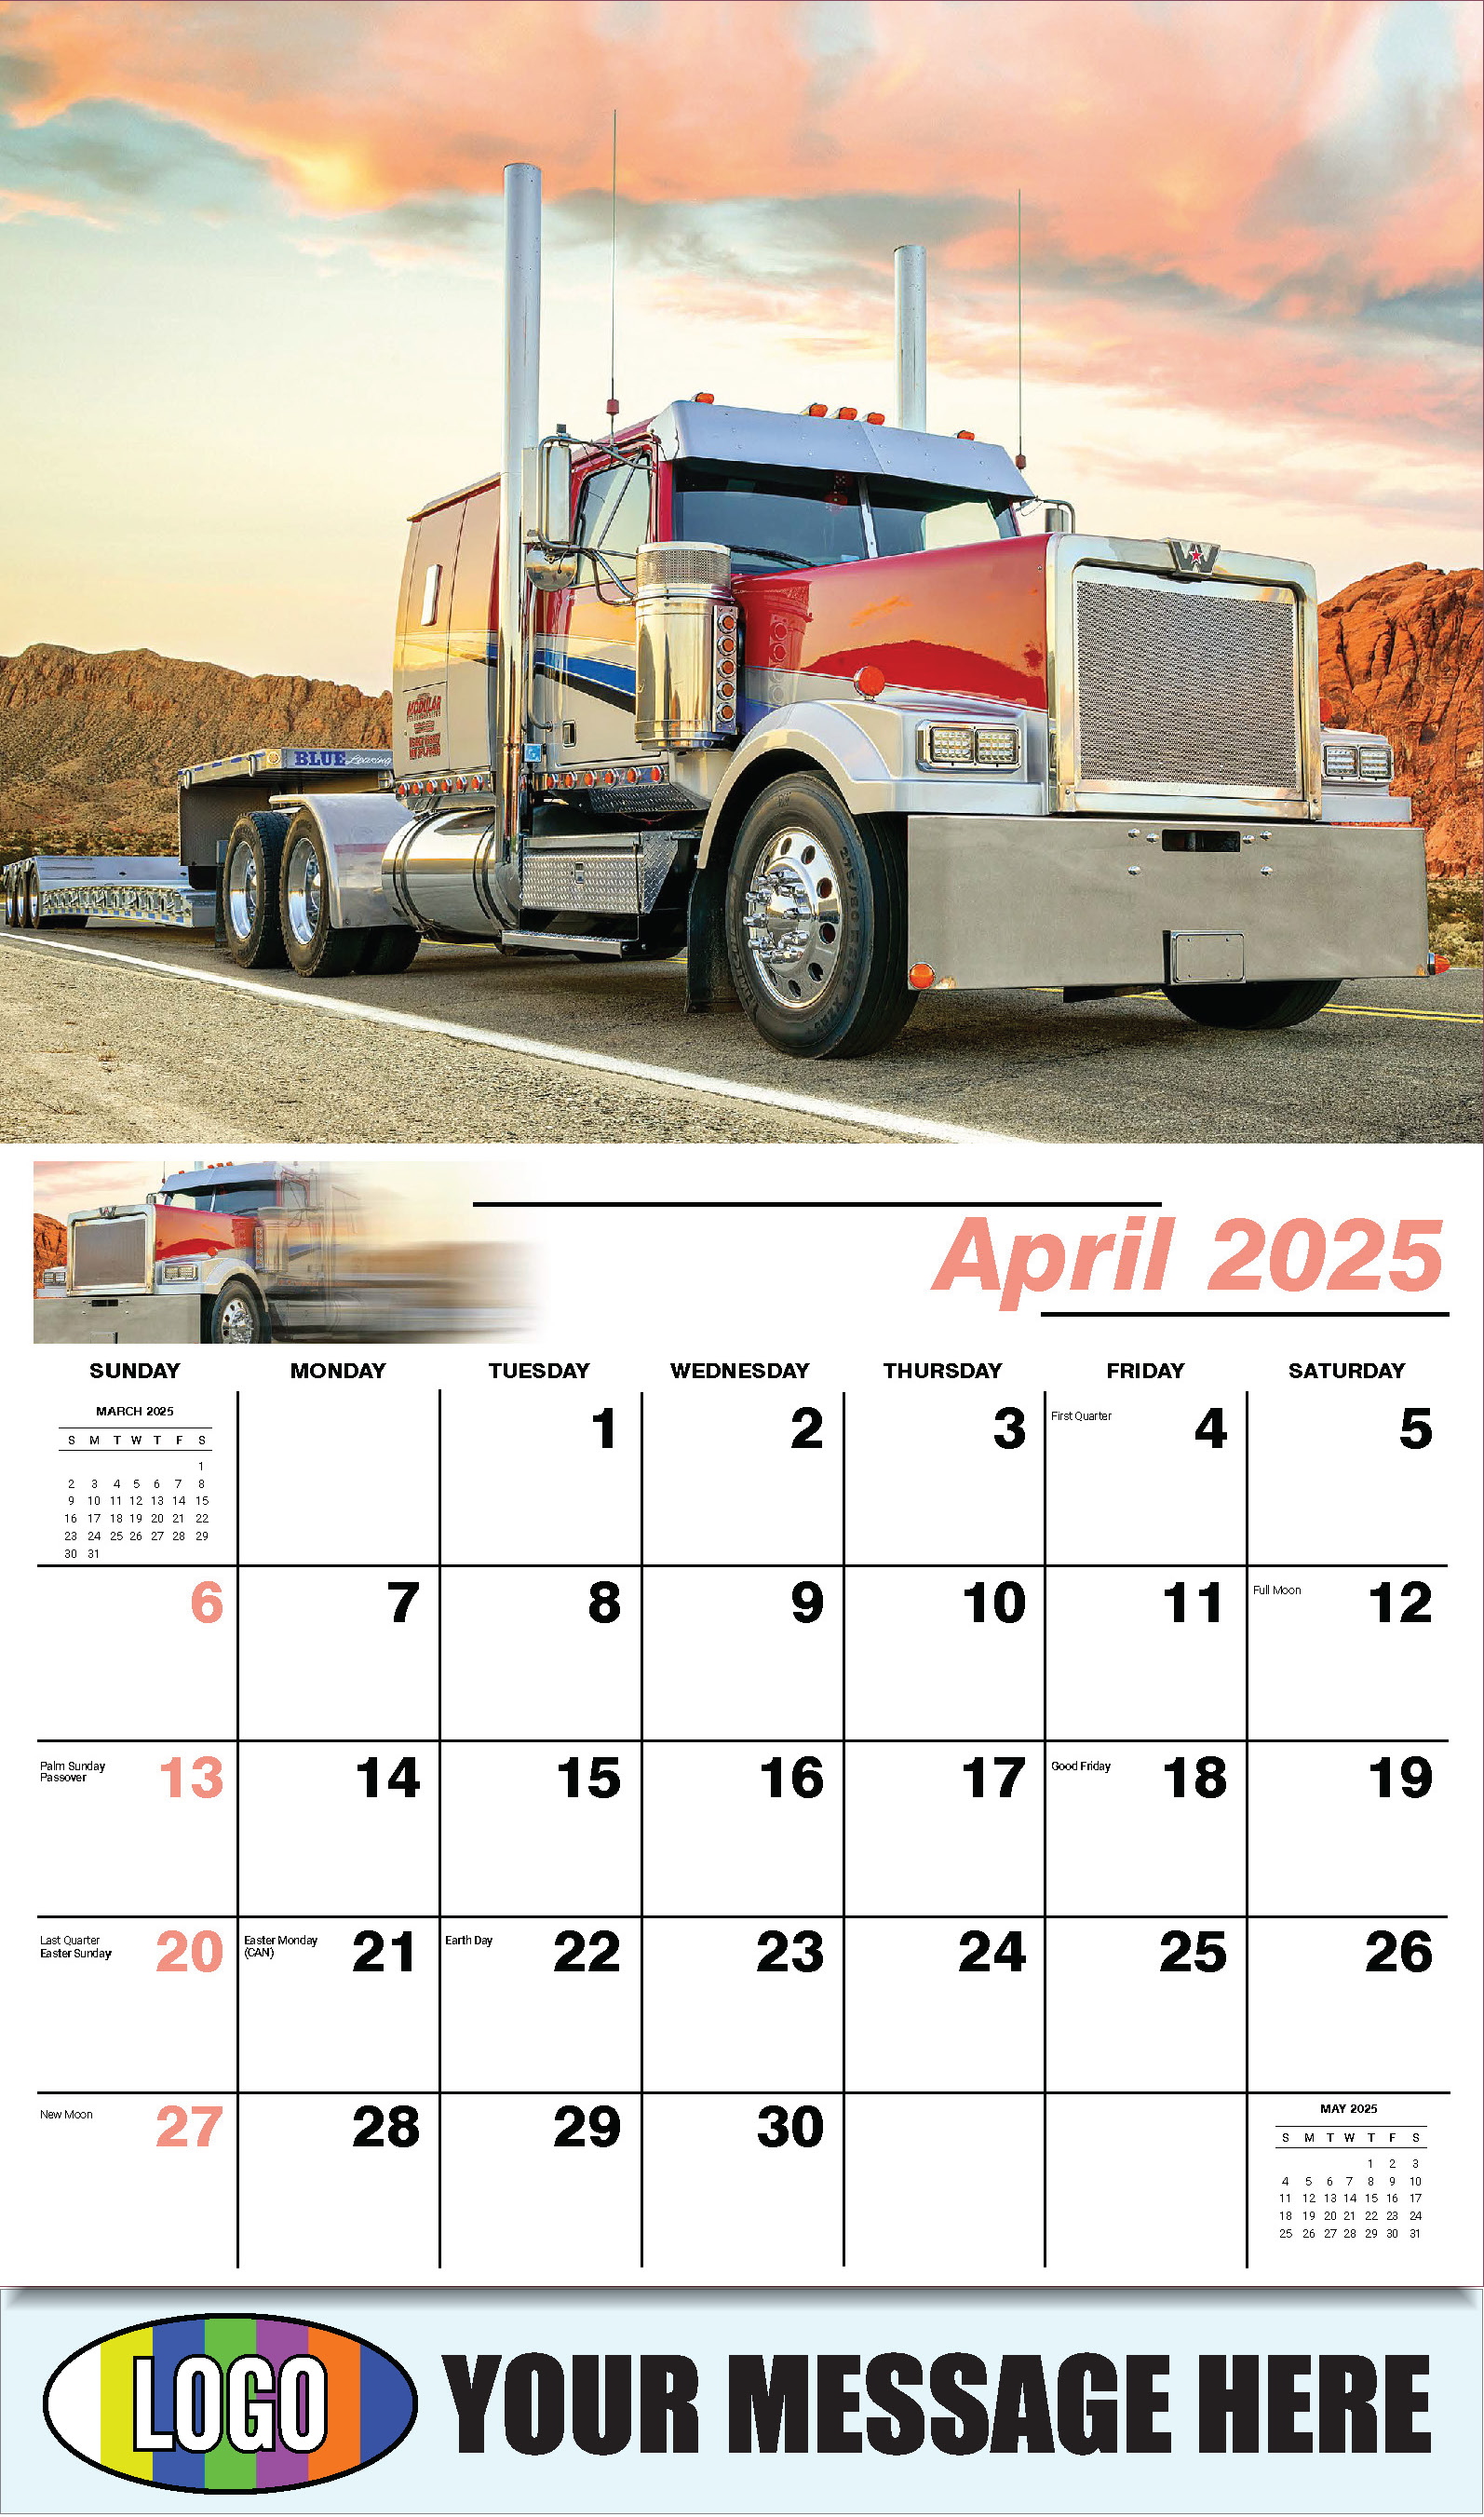 Kings of the Road 2025 Automotive Business Promotional Calendar - April